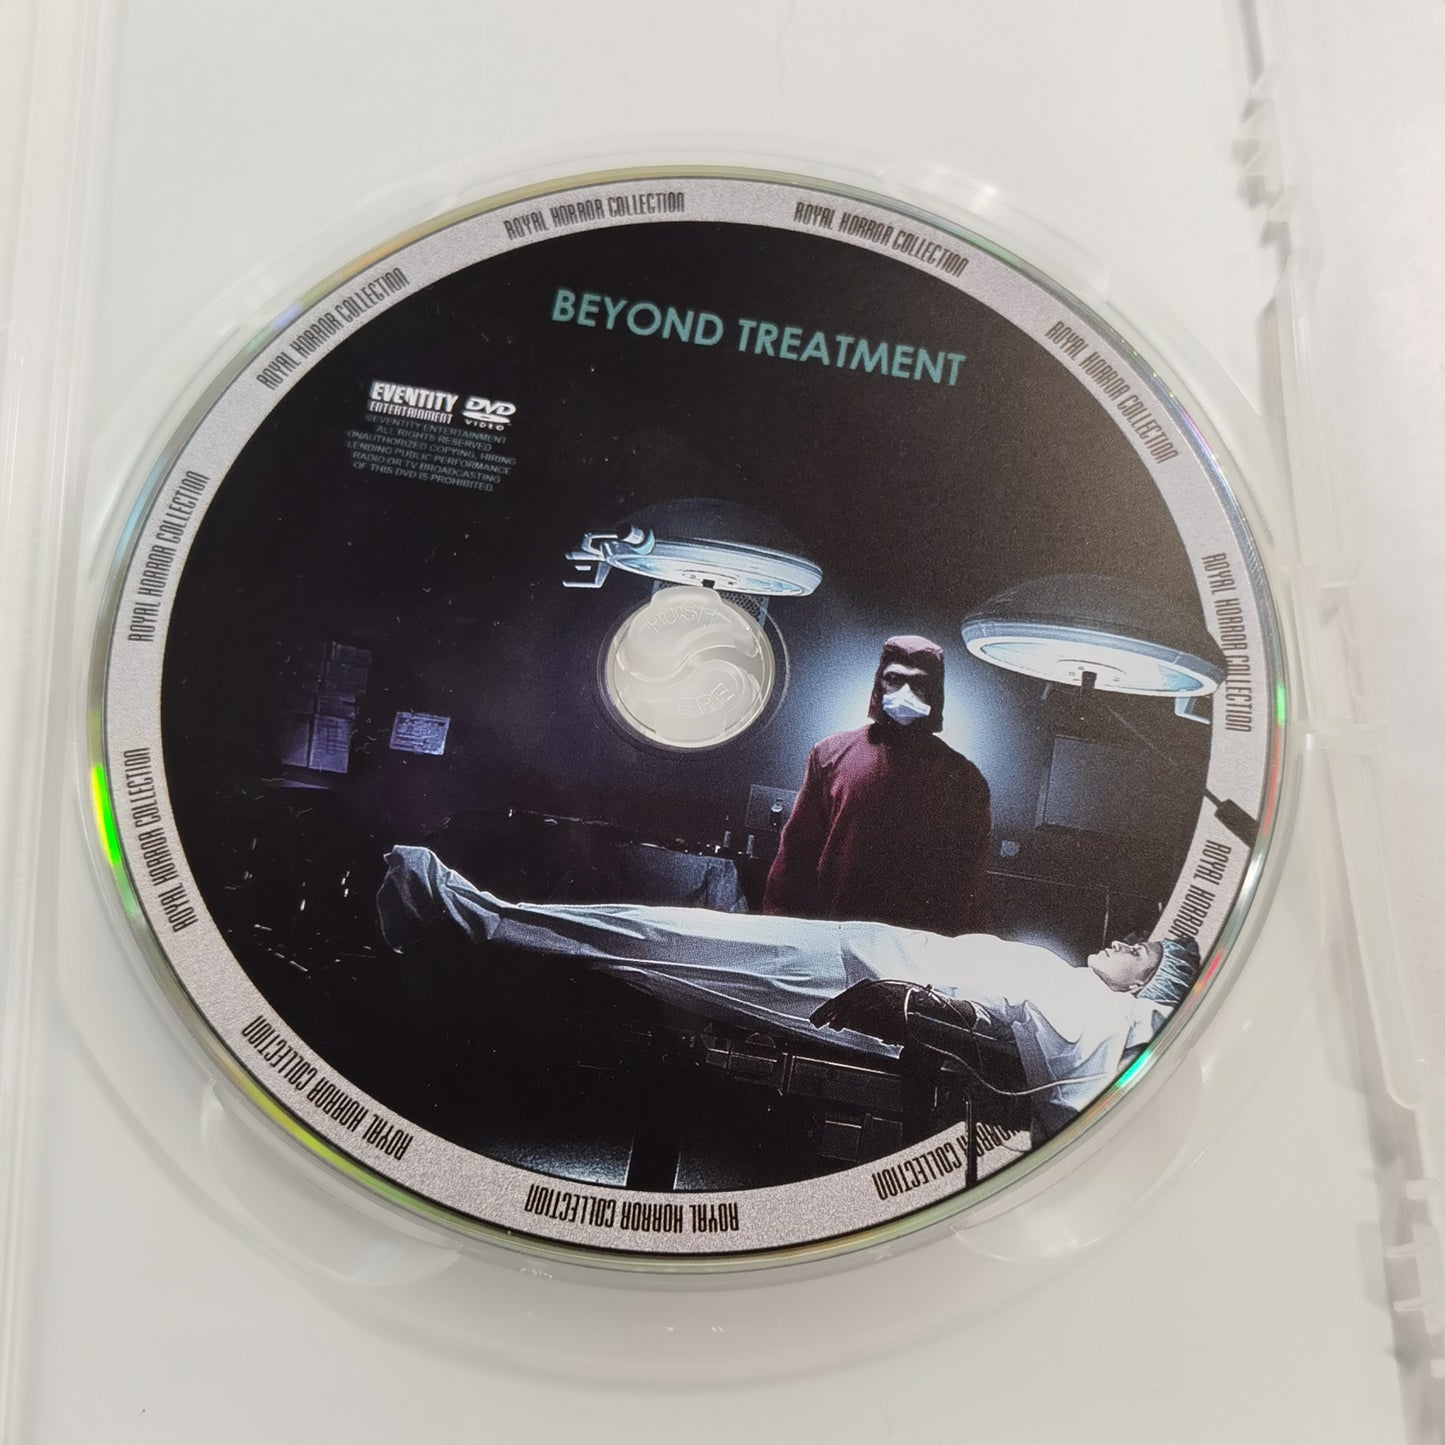 Beyond Remedy ( Beyond Treatment ) (2009) - DVD SE Royal Horror Collection